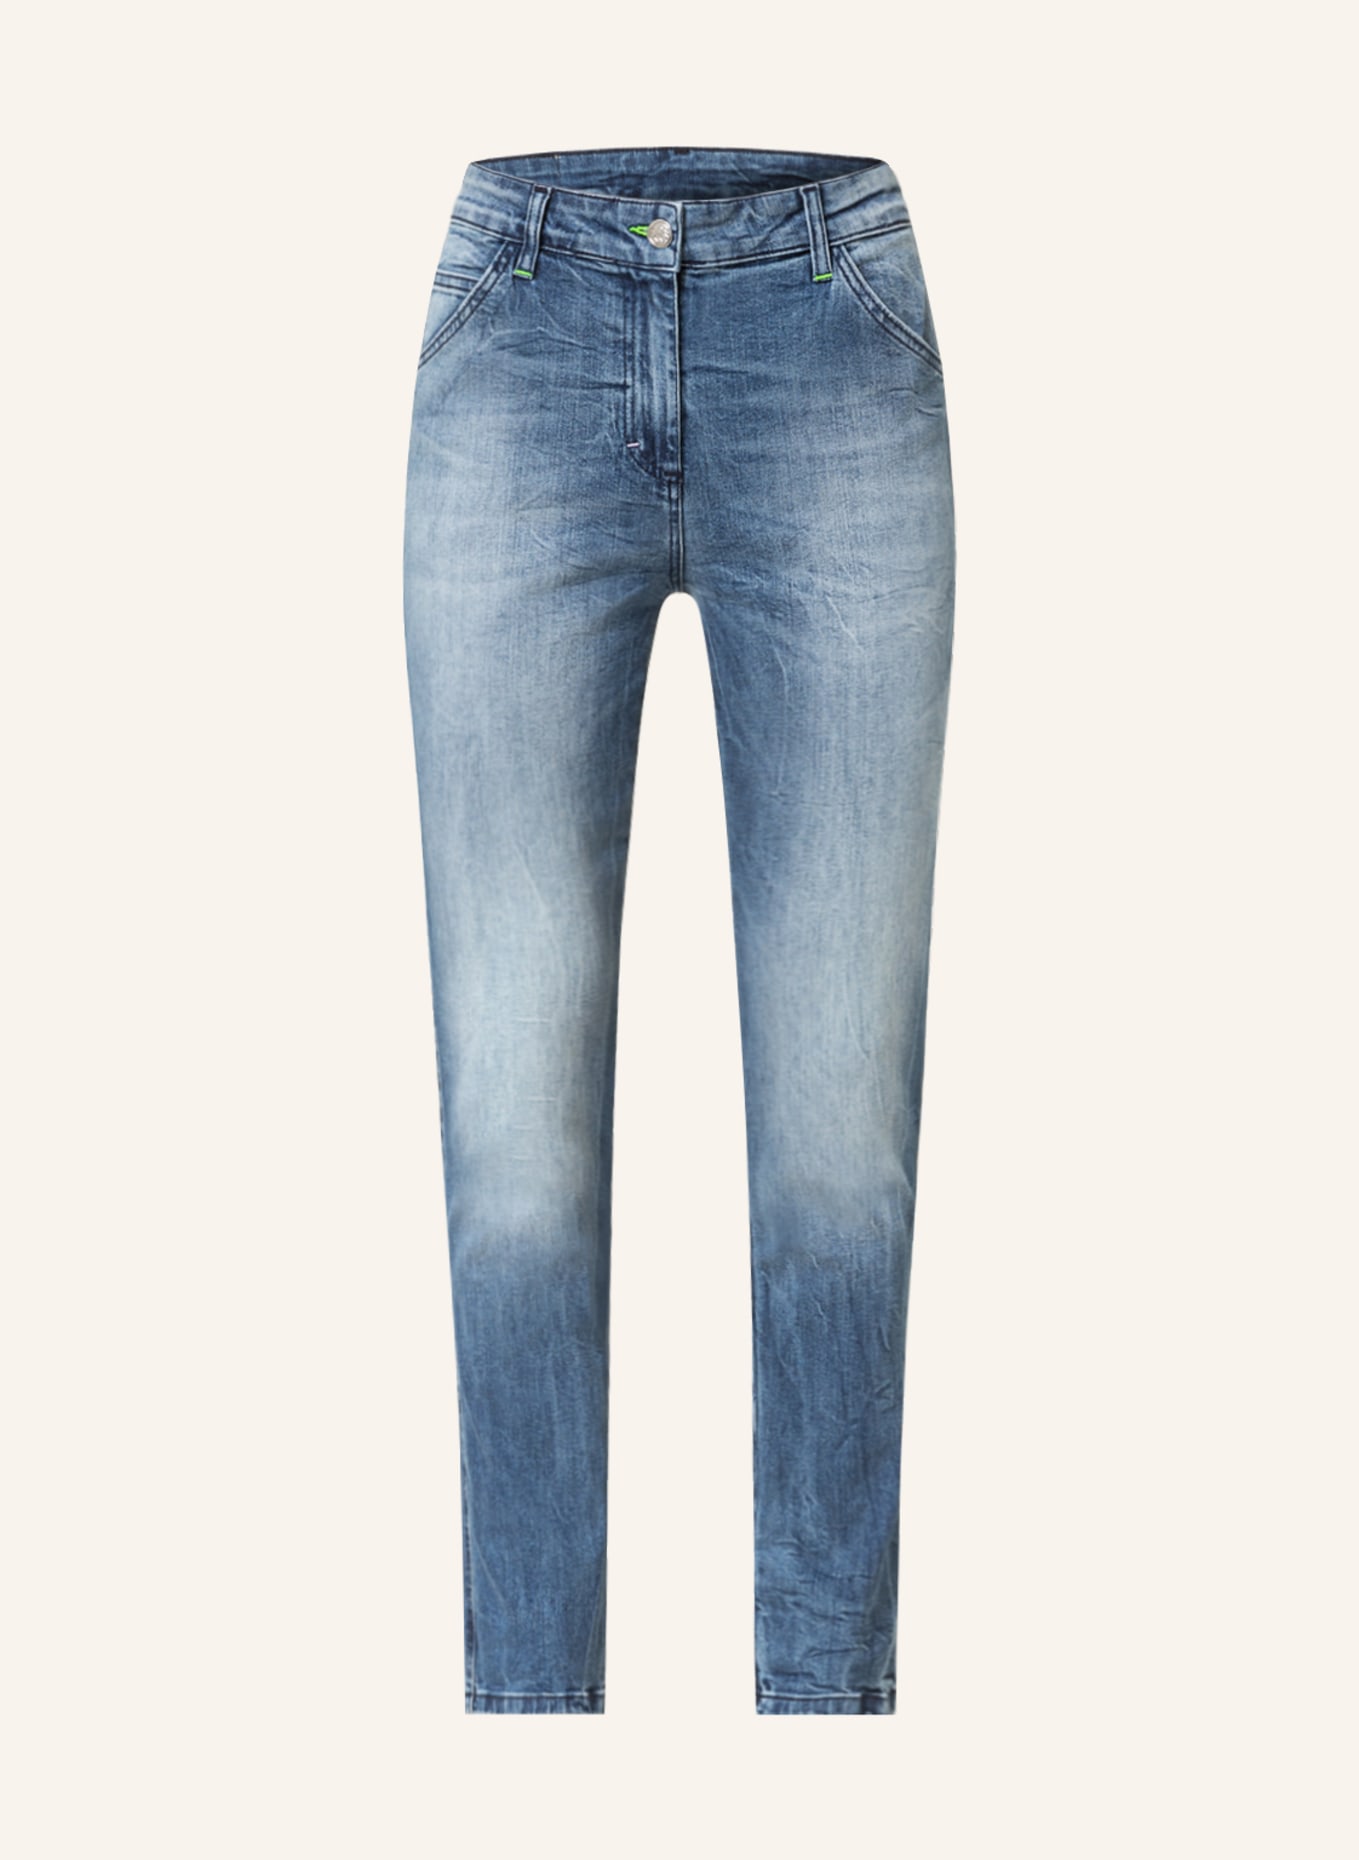 ULLI EHRLICH SPORTALM Jeans, Farbe: MARINE (Bild 1)